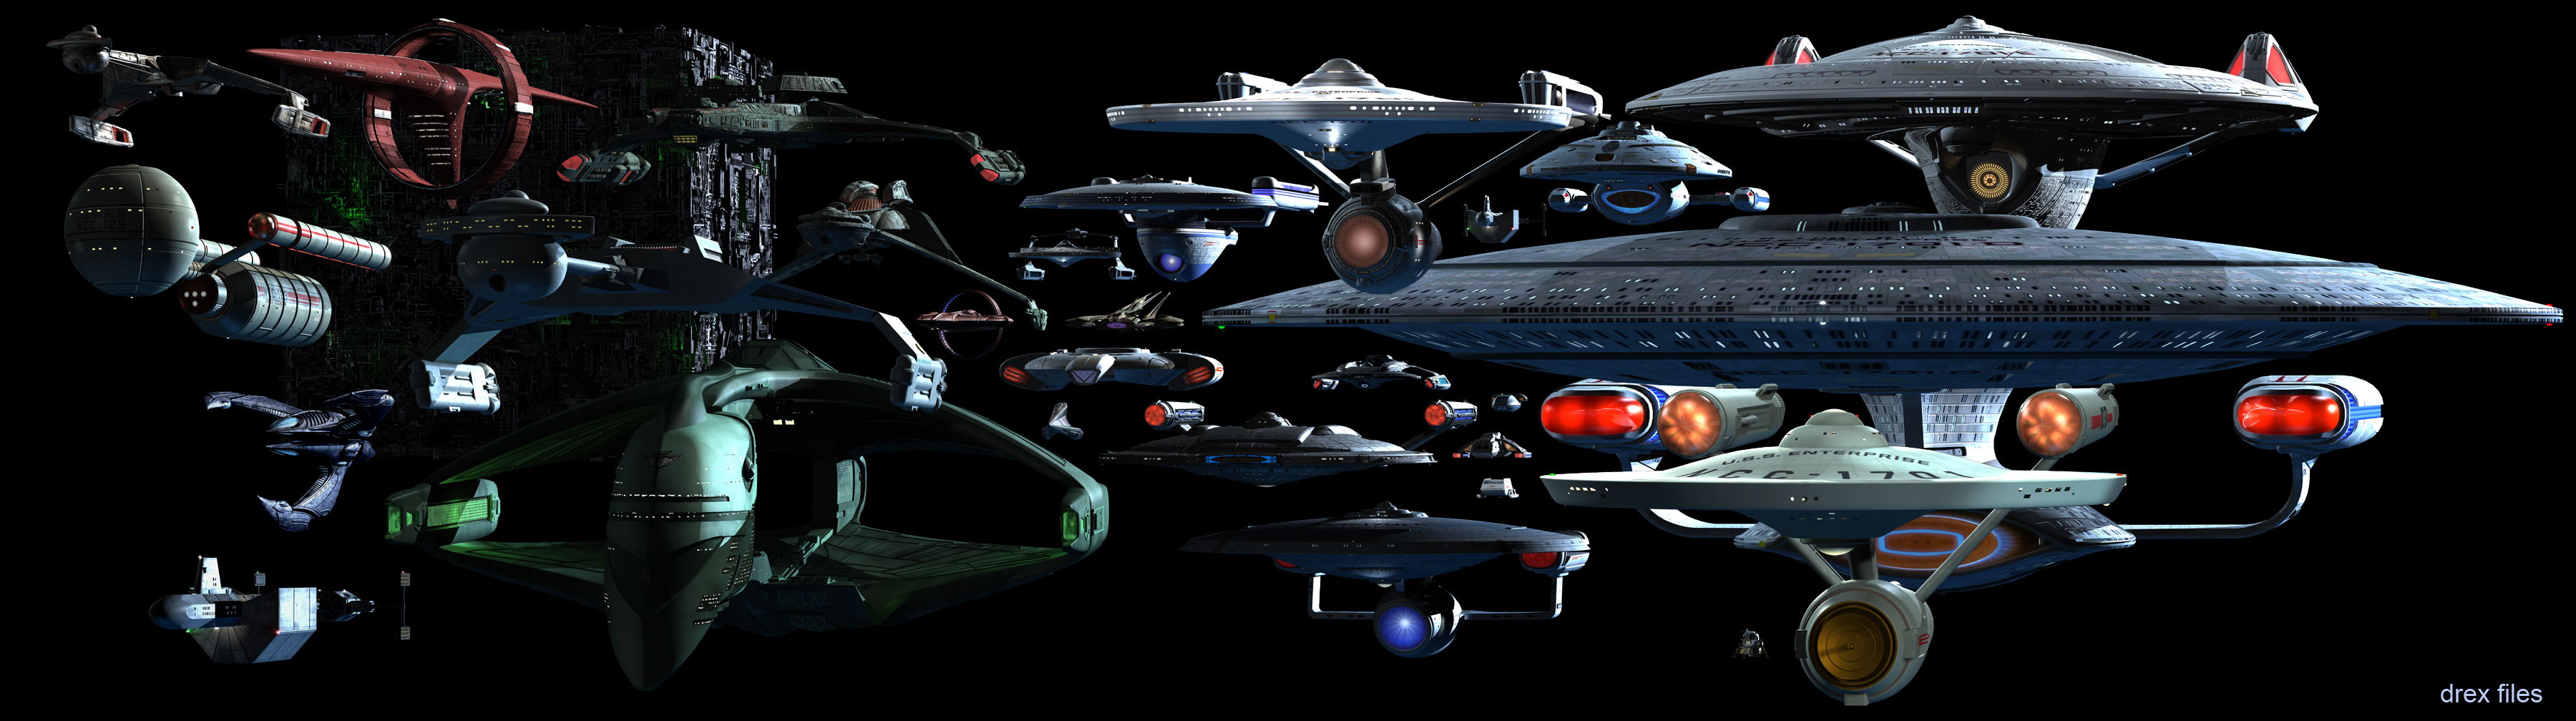 Star Trek Spaceships wallpaper 3600x1008 70772 WallpaperUP 3600x1008